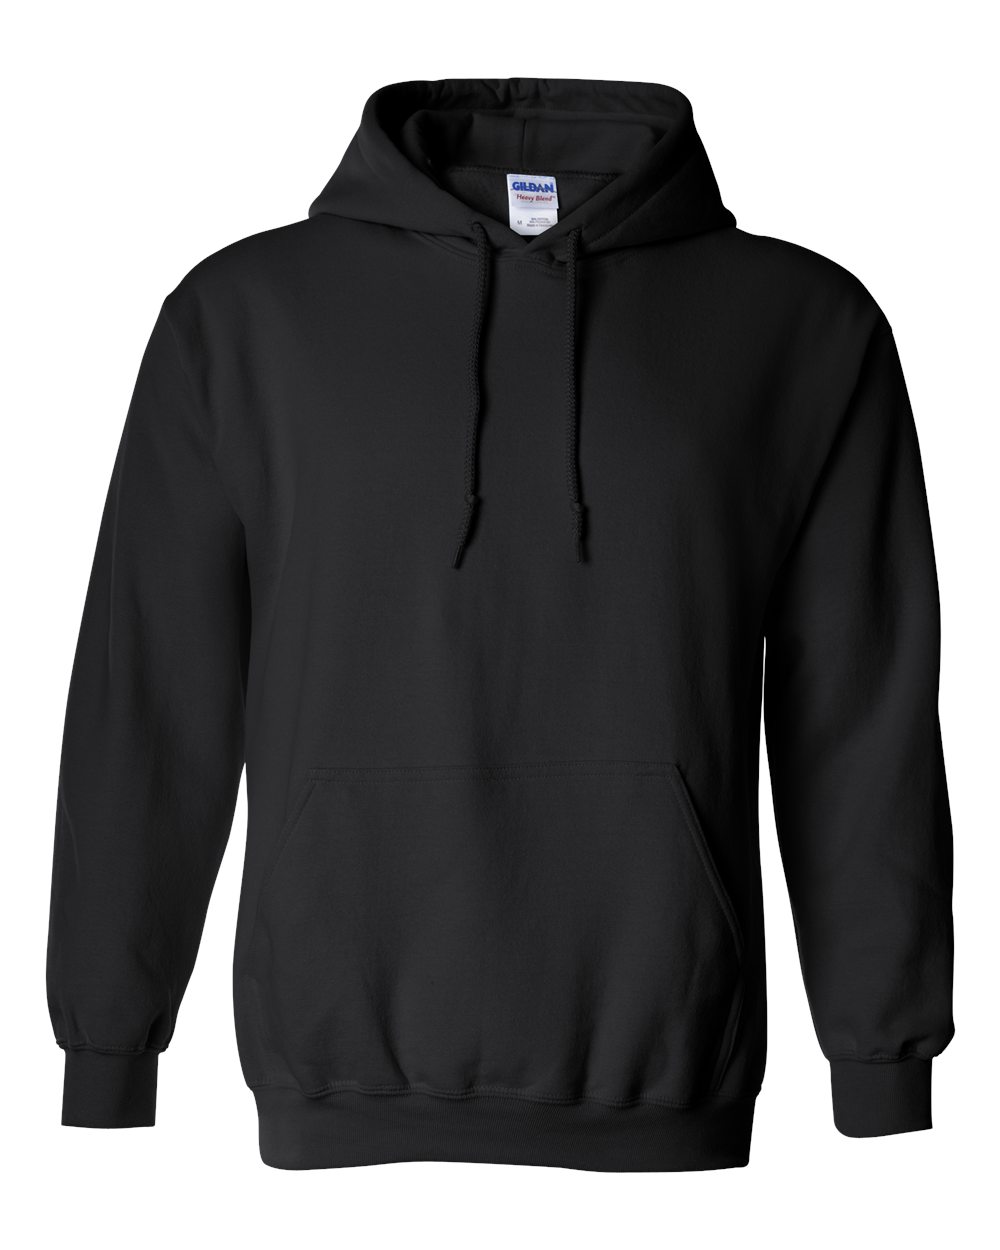 West De Pere Black Hoodie Sweatshirt | W logo